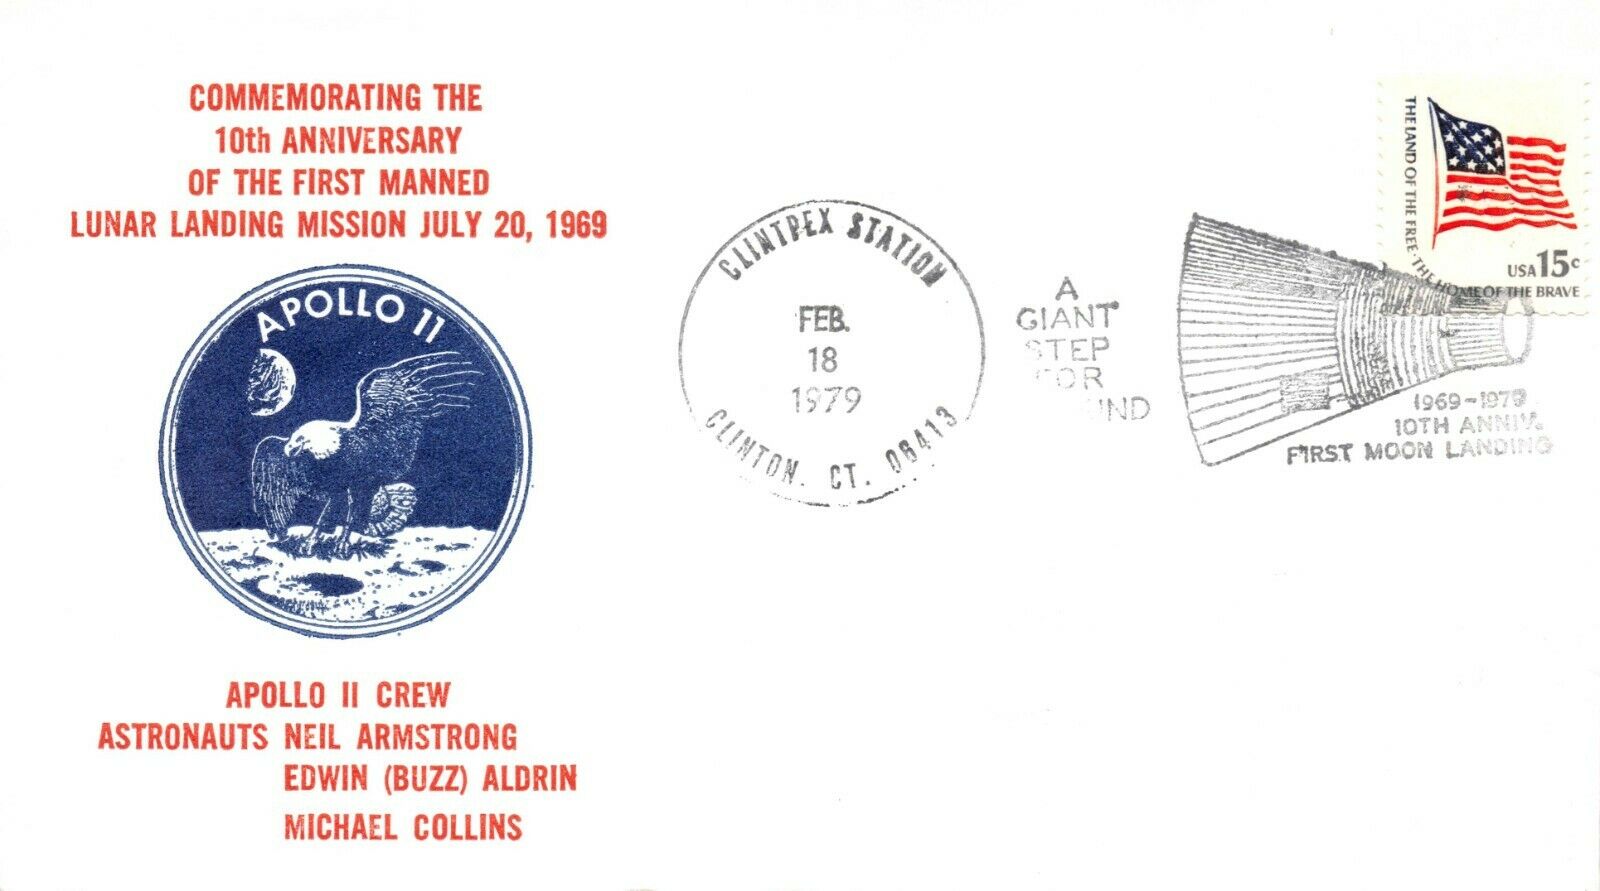 Apollo 11 10th Anniv. Clintpex, Ct. Cancel 2/18/79 Patch Cachet - Stamp Sc#1597